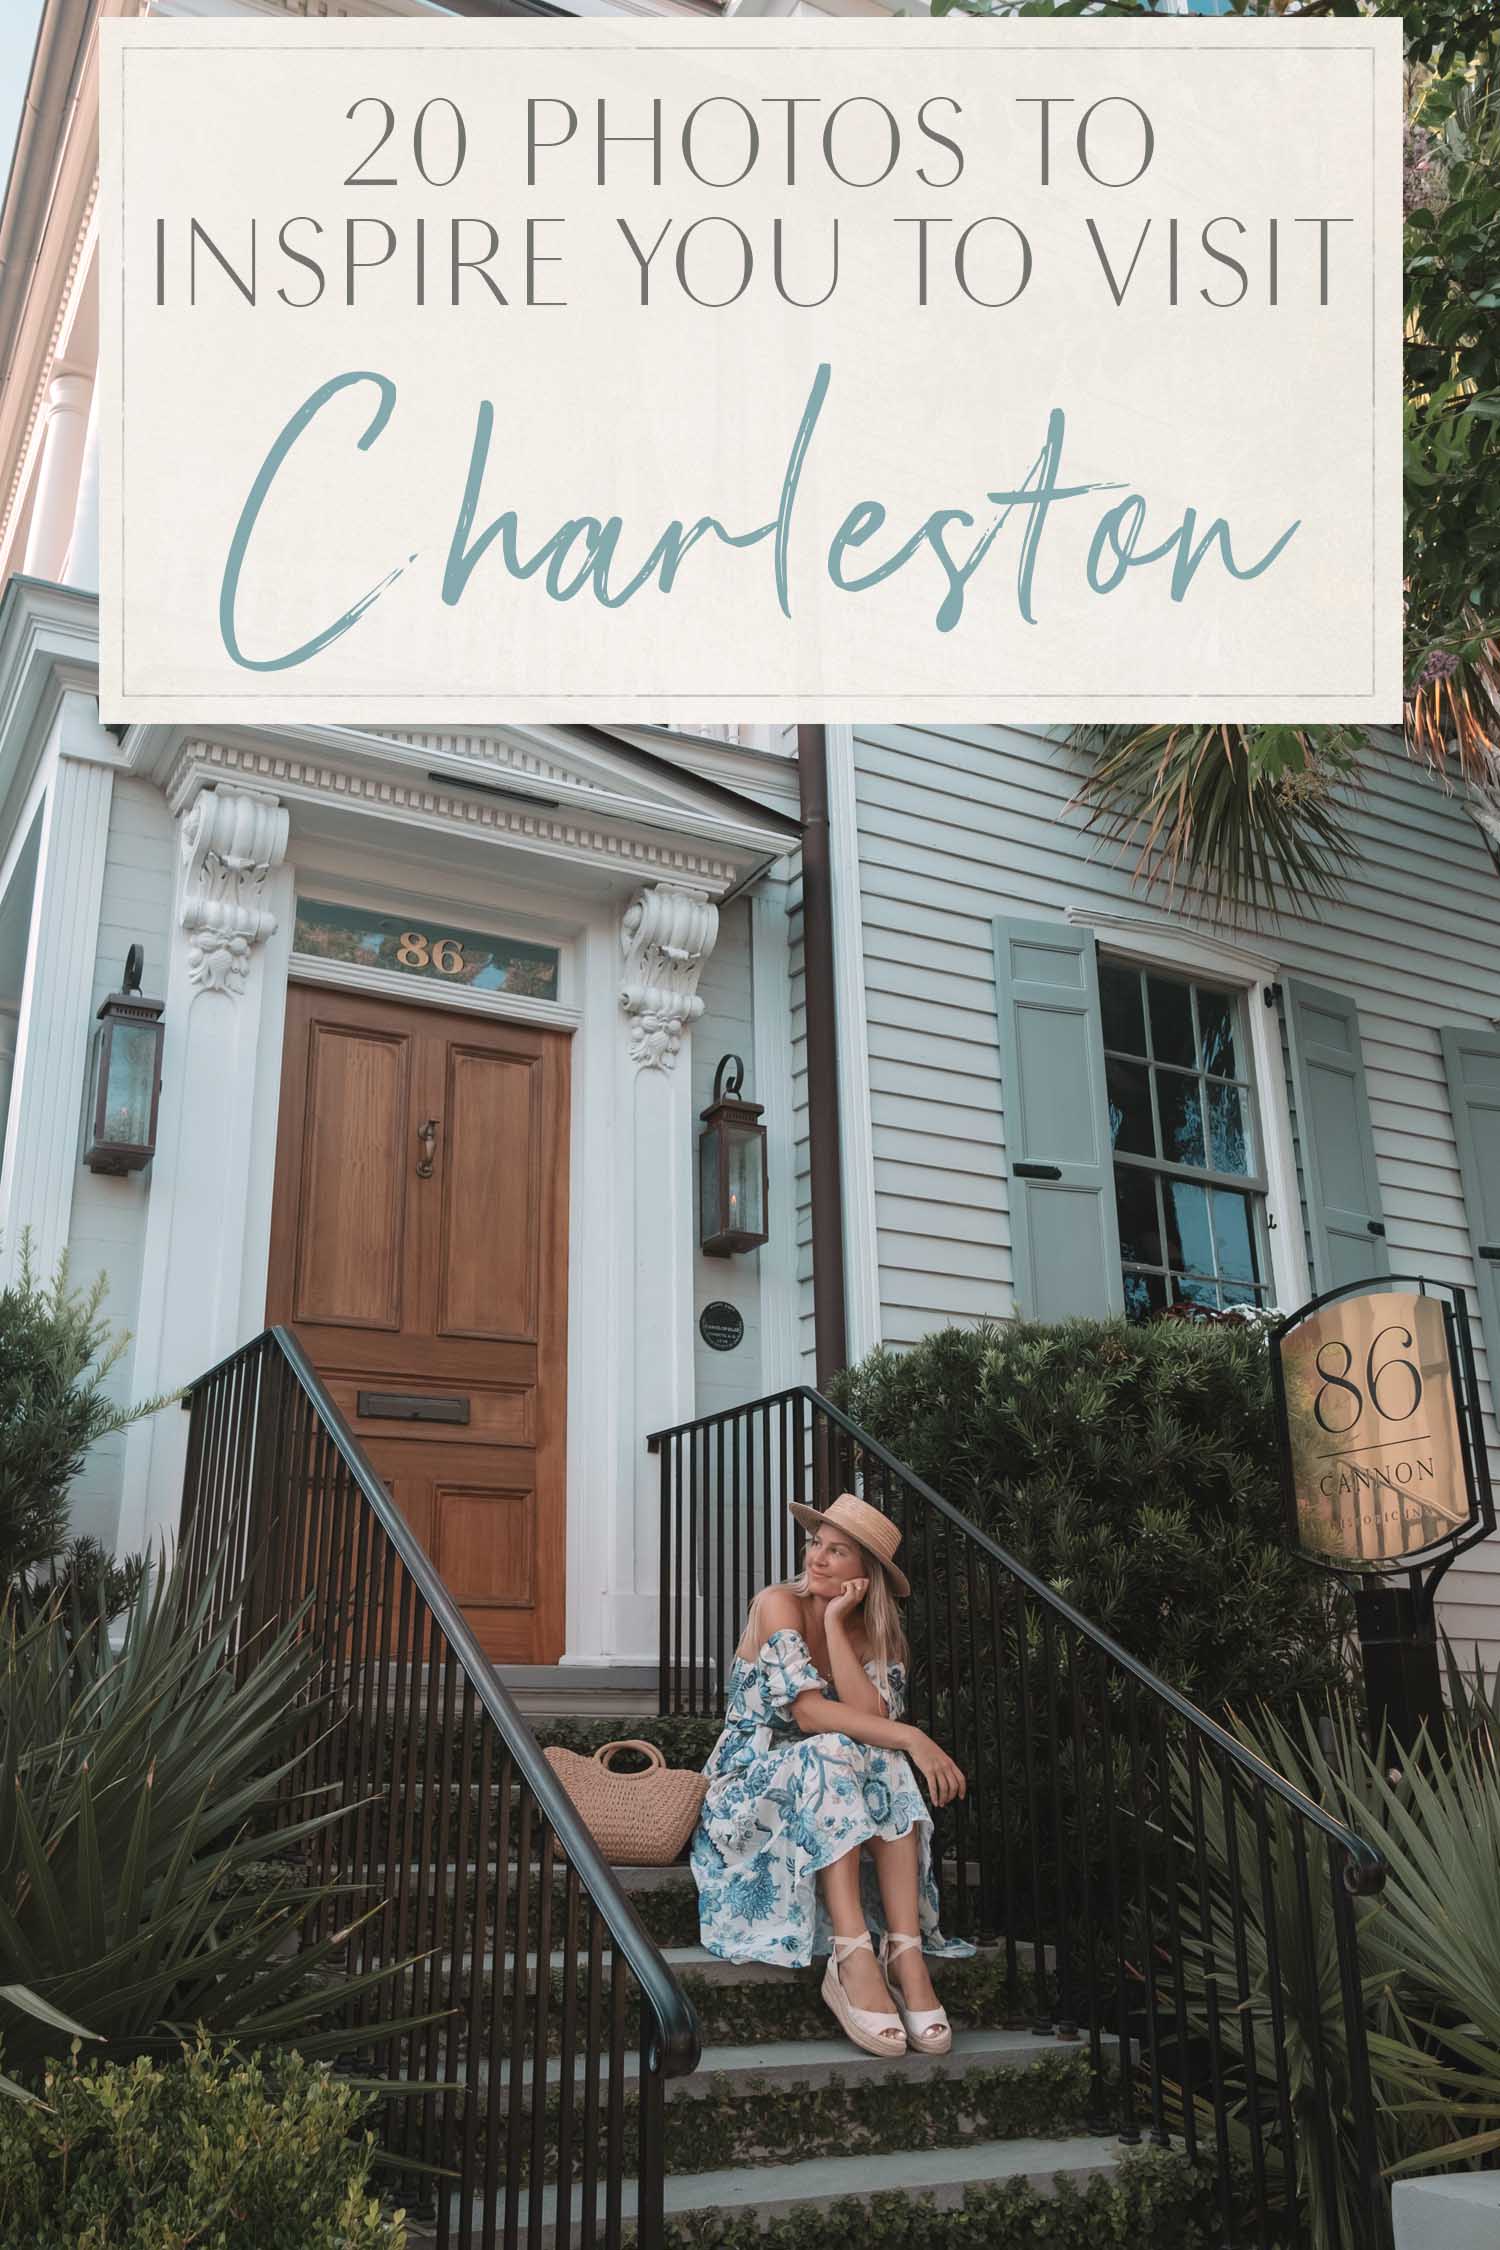 20 Photos to Inspire You to Visit Charleston